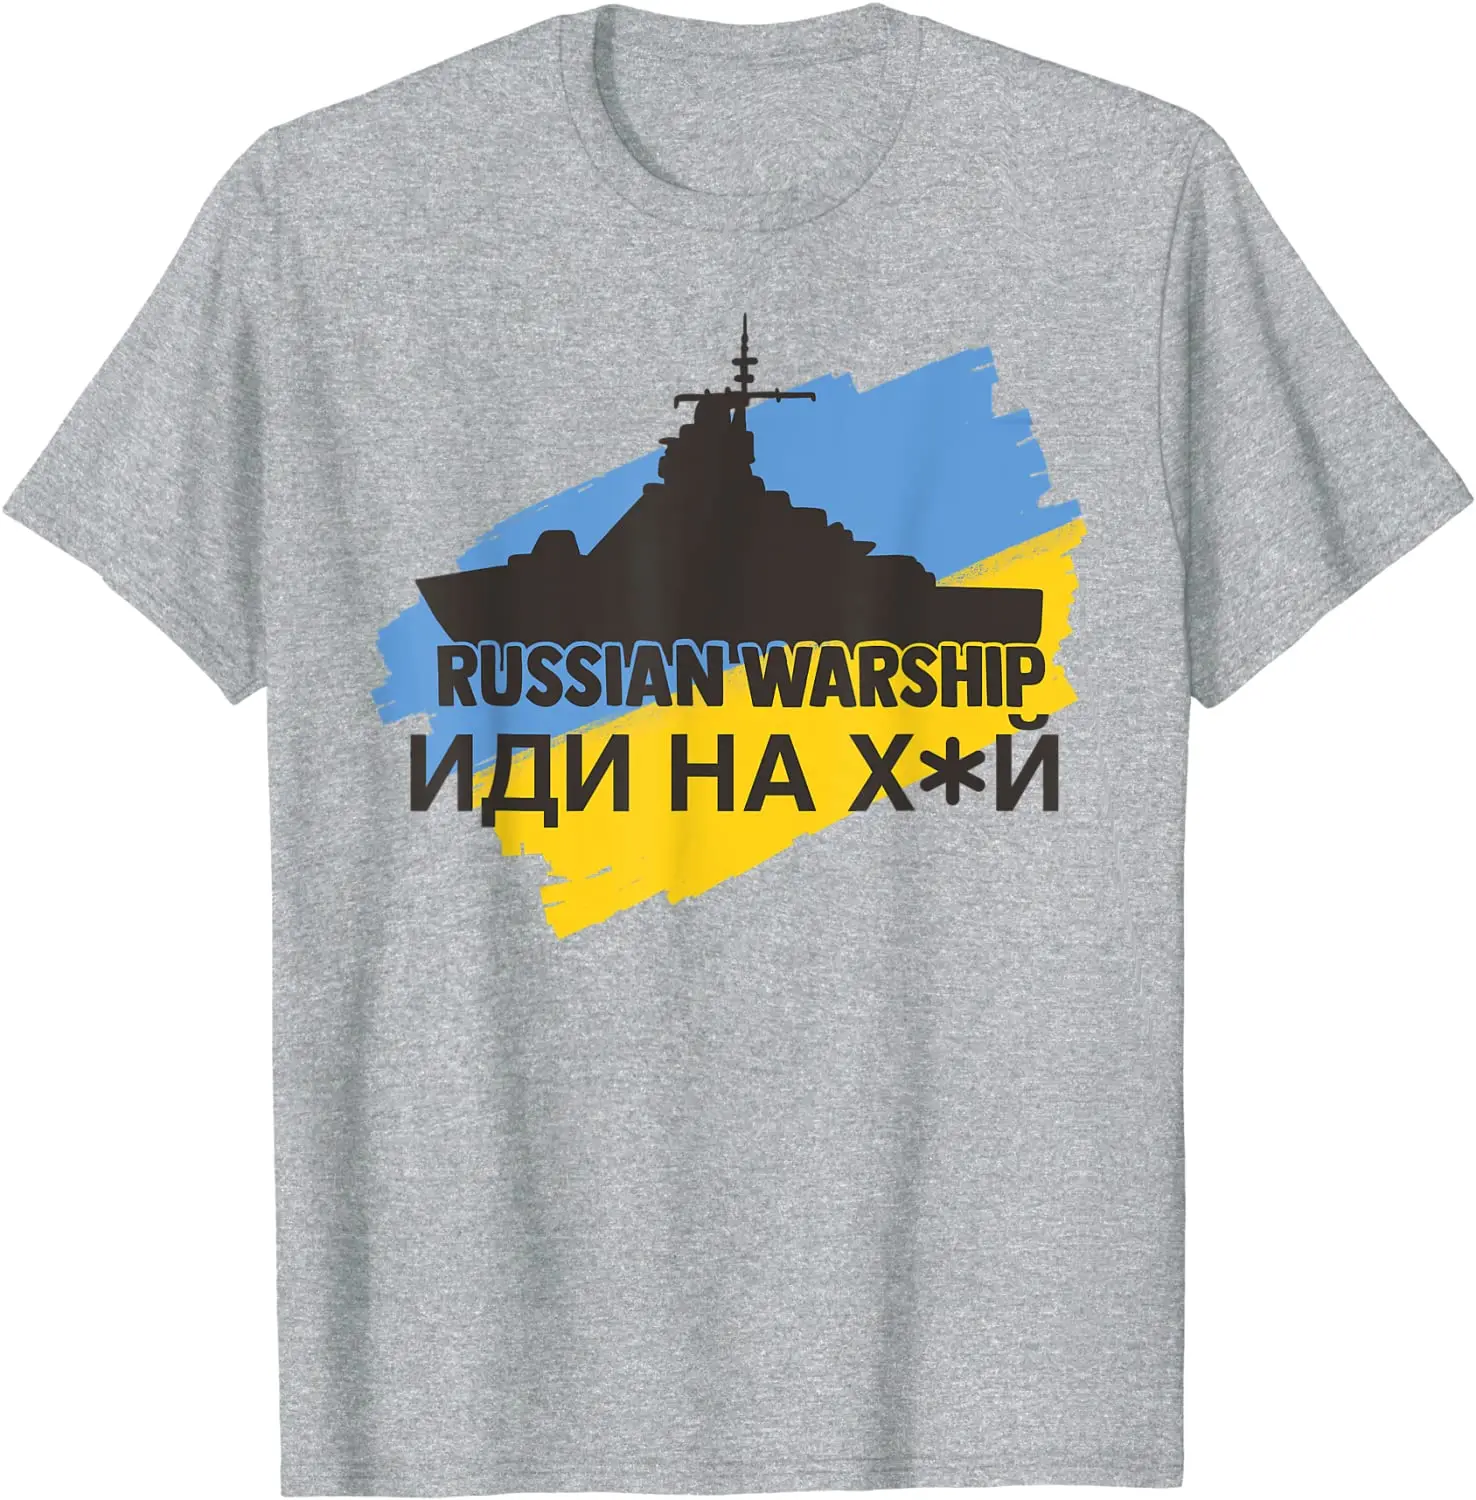 

Slava Ukraini Ukraine Pride Flag Ukraina Symbols T-Shirt Short Sleeve Casual 100% Cotton O-Neck Summer Tees